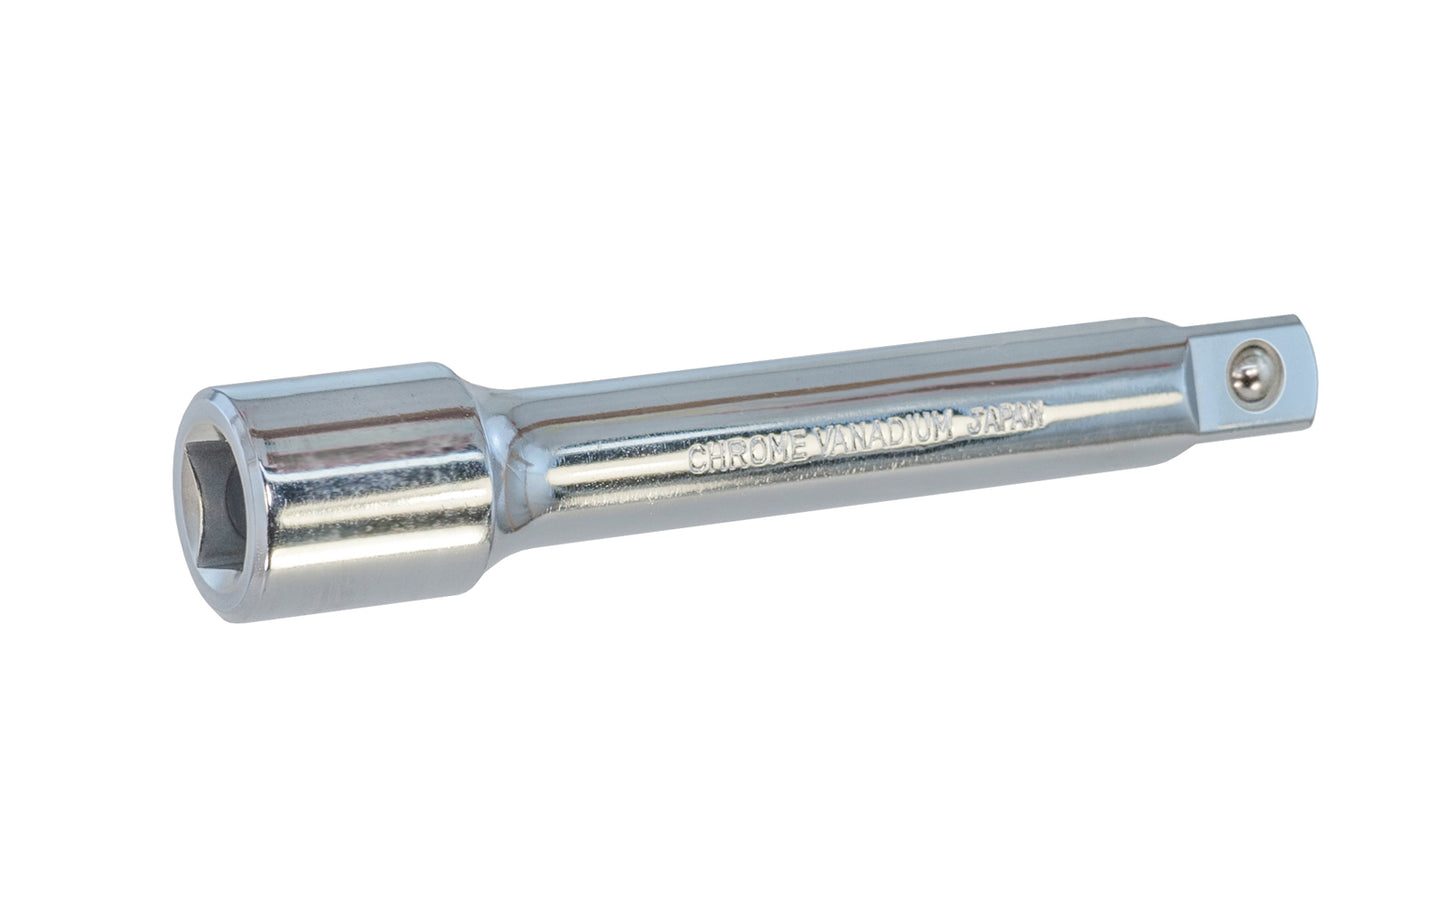 5" Socket Extension 1/2" Dr. Chrome Vanadium Steel. Extension bar.  Made in Japan